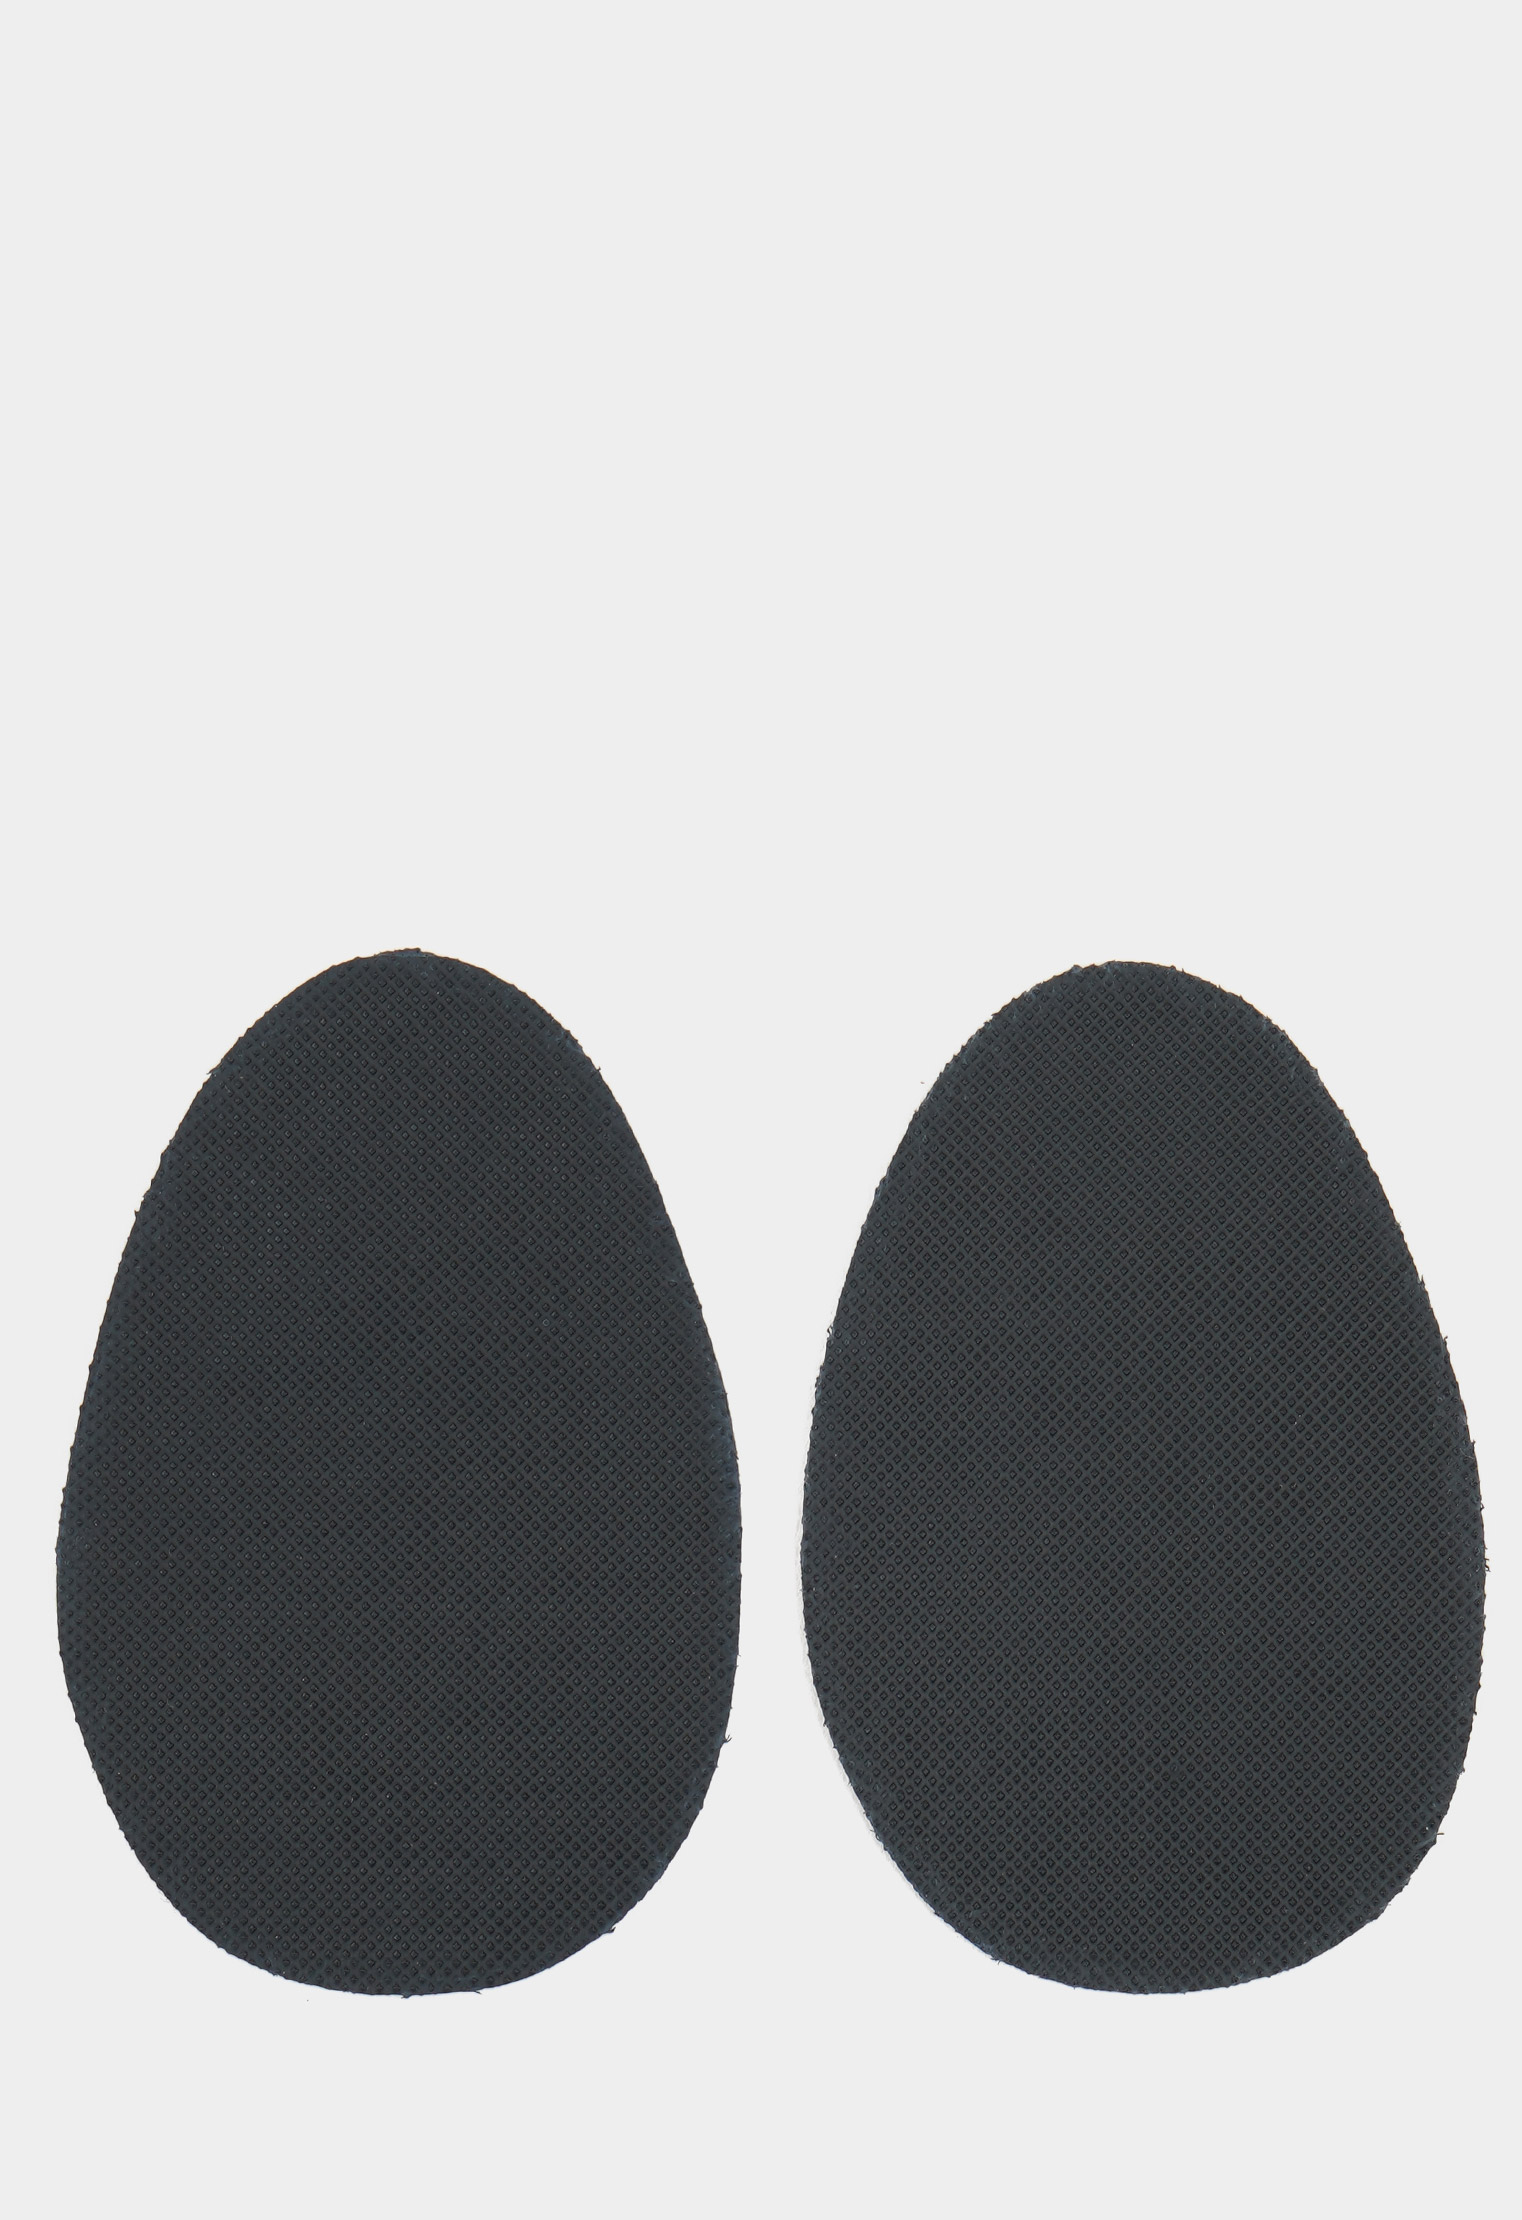 Стельки и вкладыши 20-8875 SAPHIR - Наклейка на подошву Semelle Insolle, Anti-Gliss, р.2 (38/40) уход за обувью 20 1182 saphir пяткоудерживатели semelle insolle anti glissoires auto adhesifs black